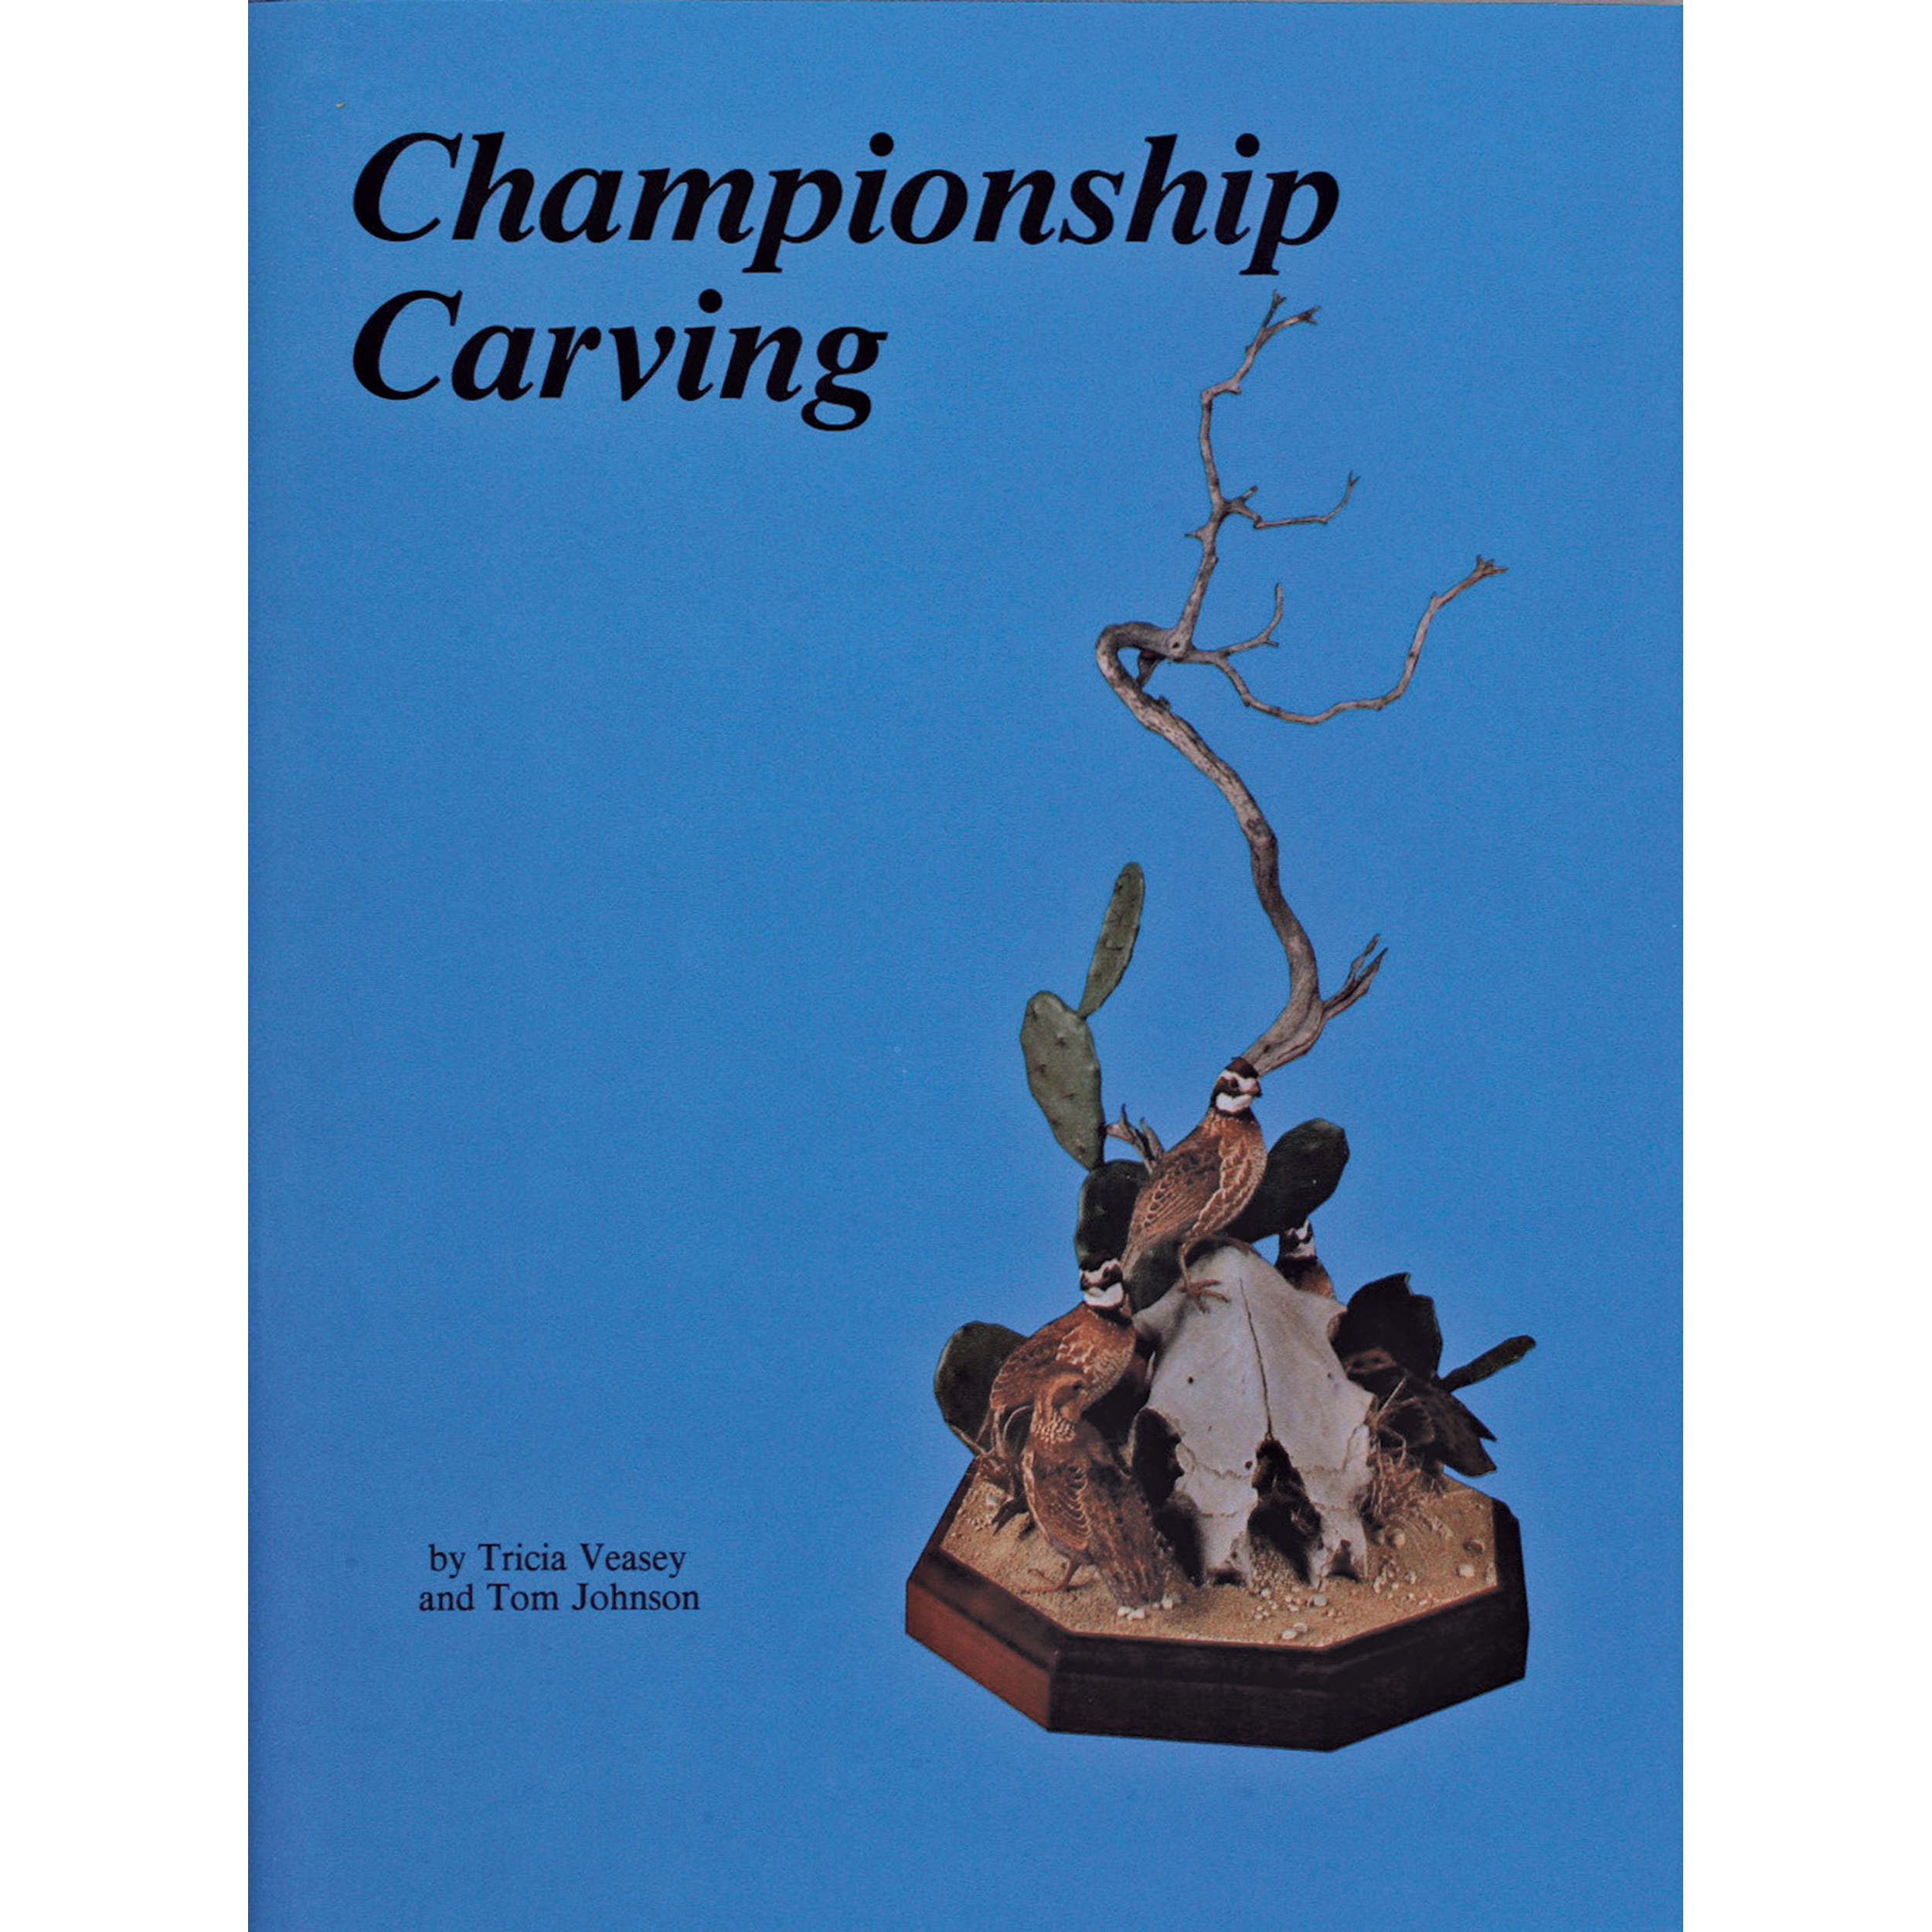 Championship Carving